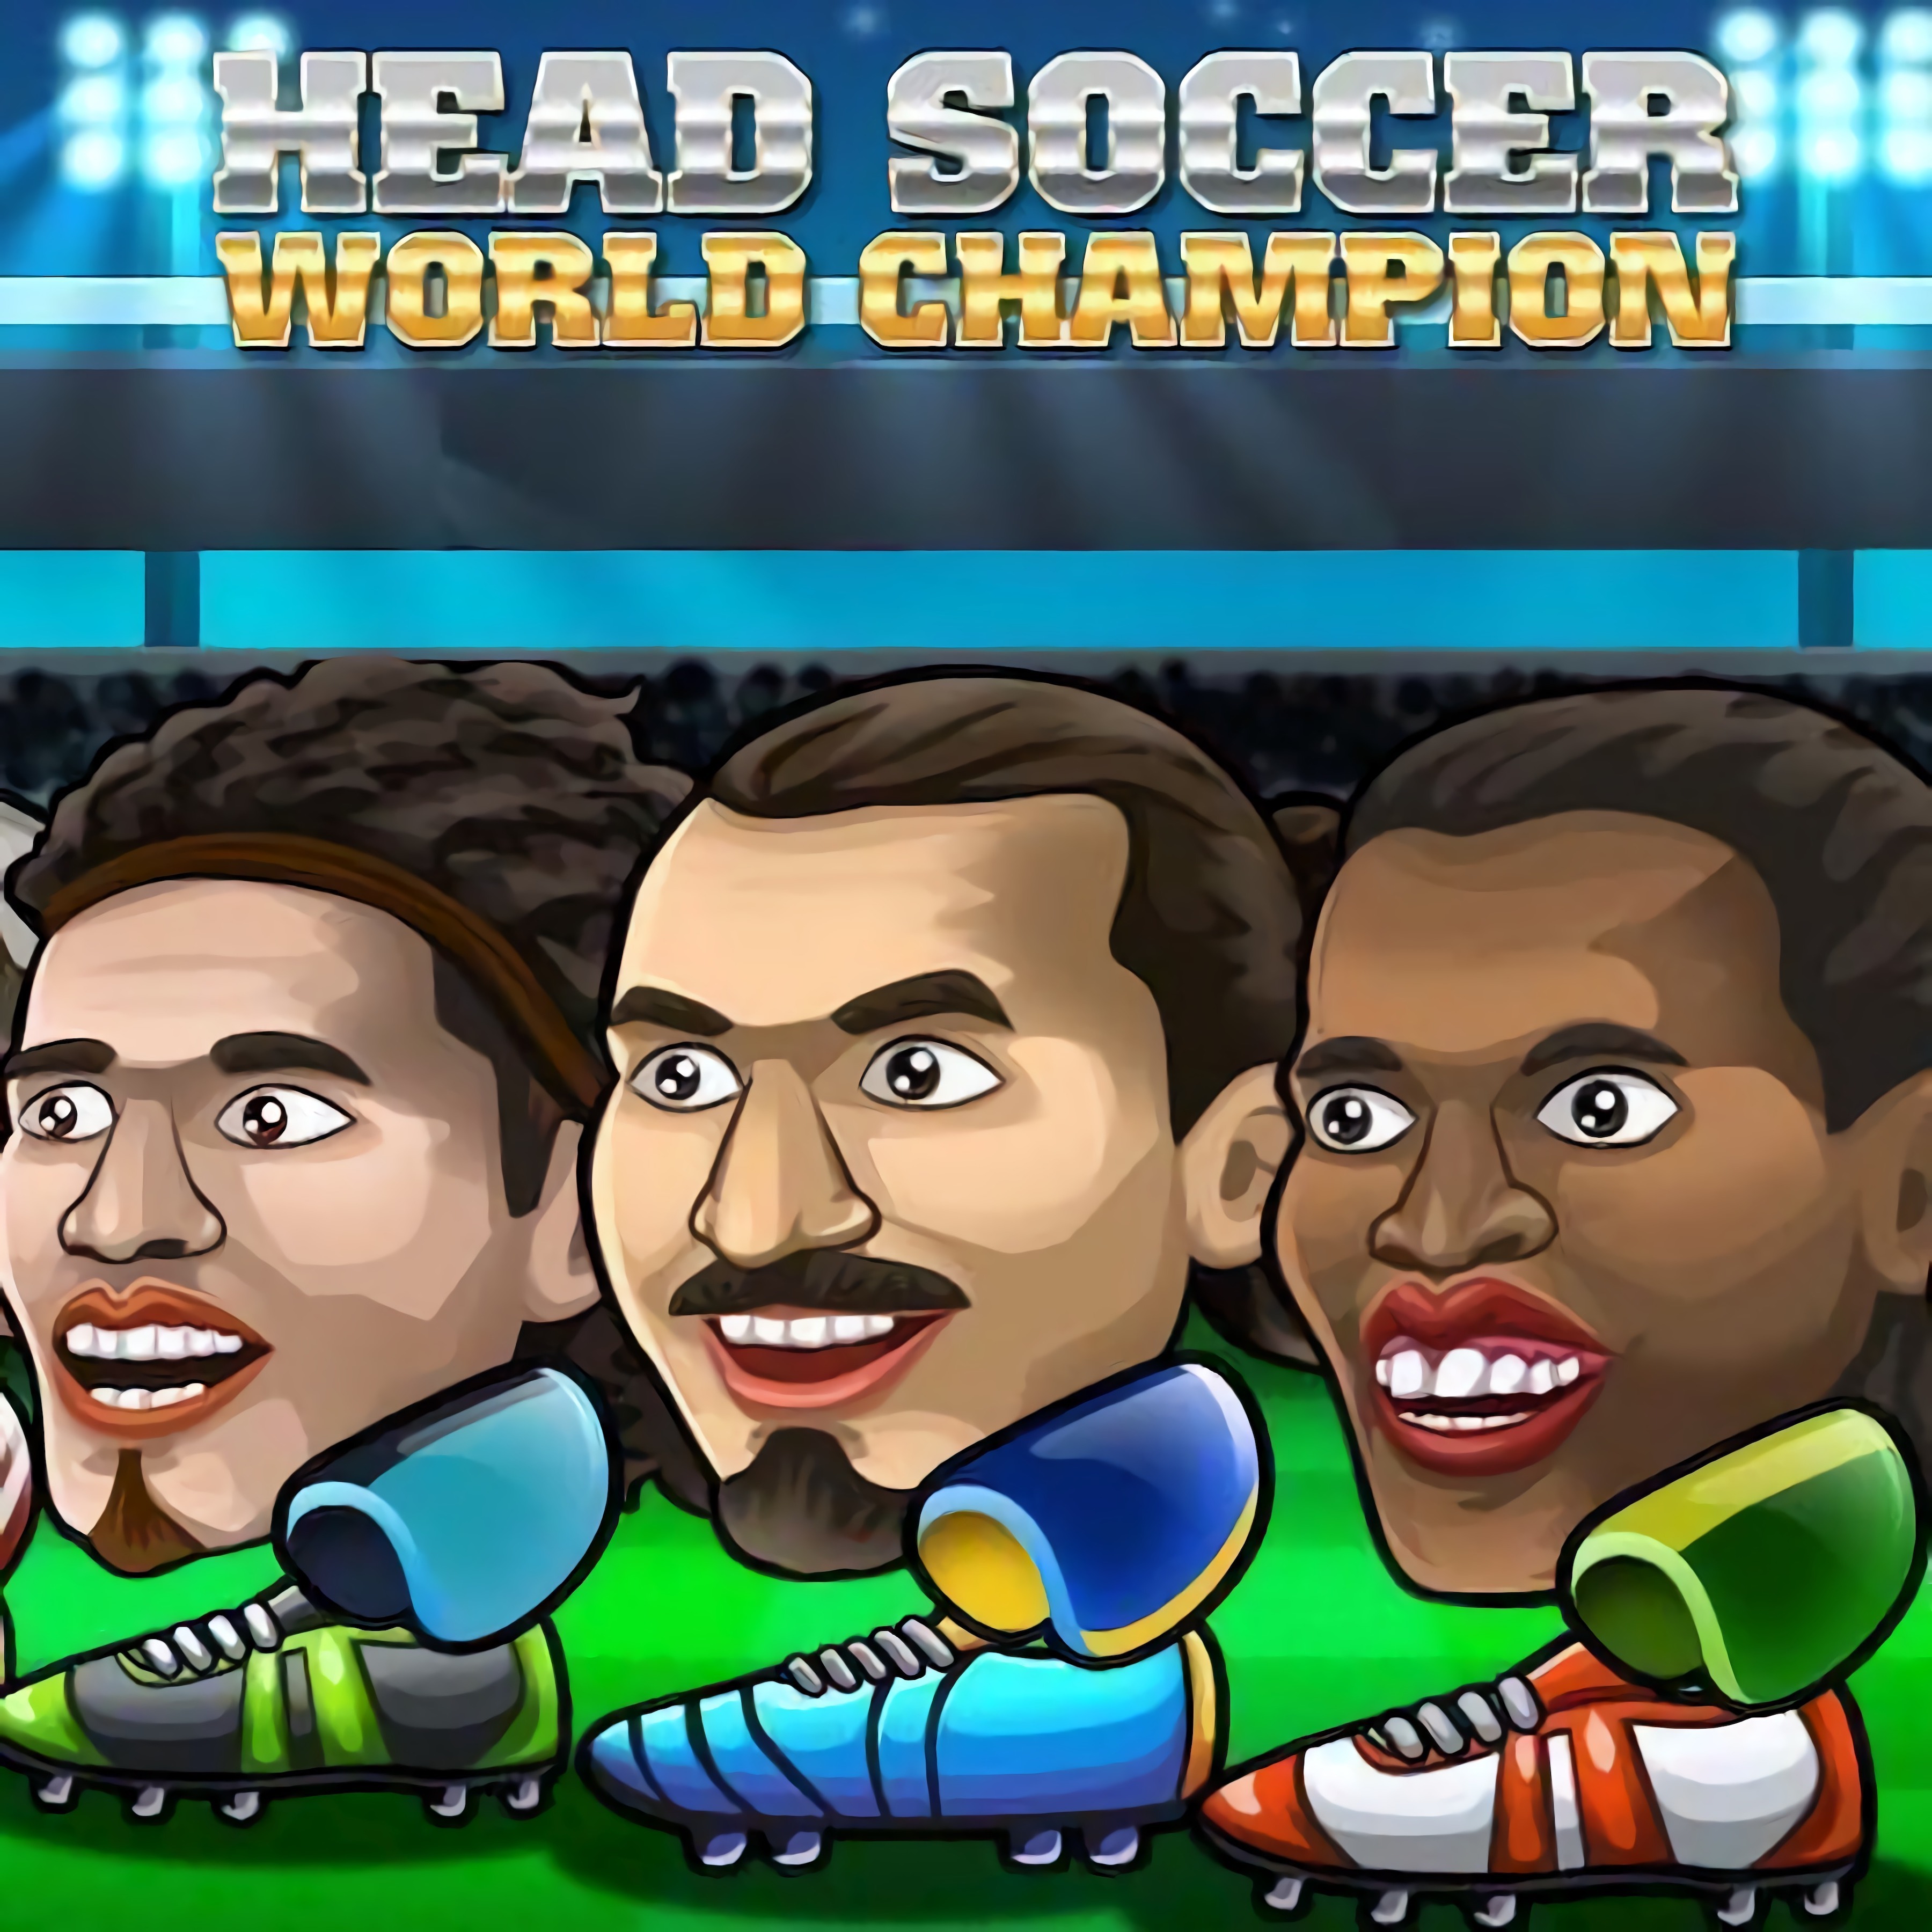 Head Soccer World Champion - Play Free Game at Friv5